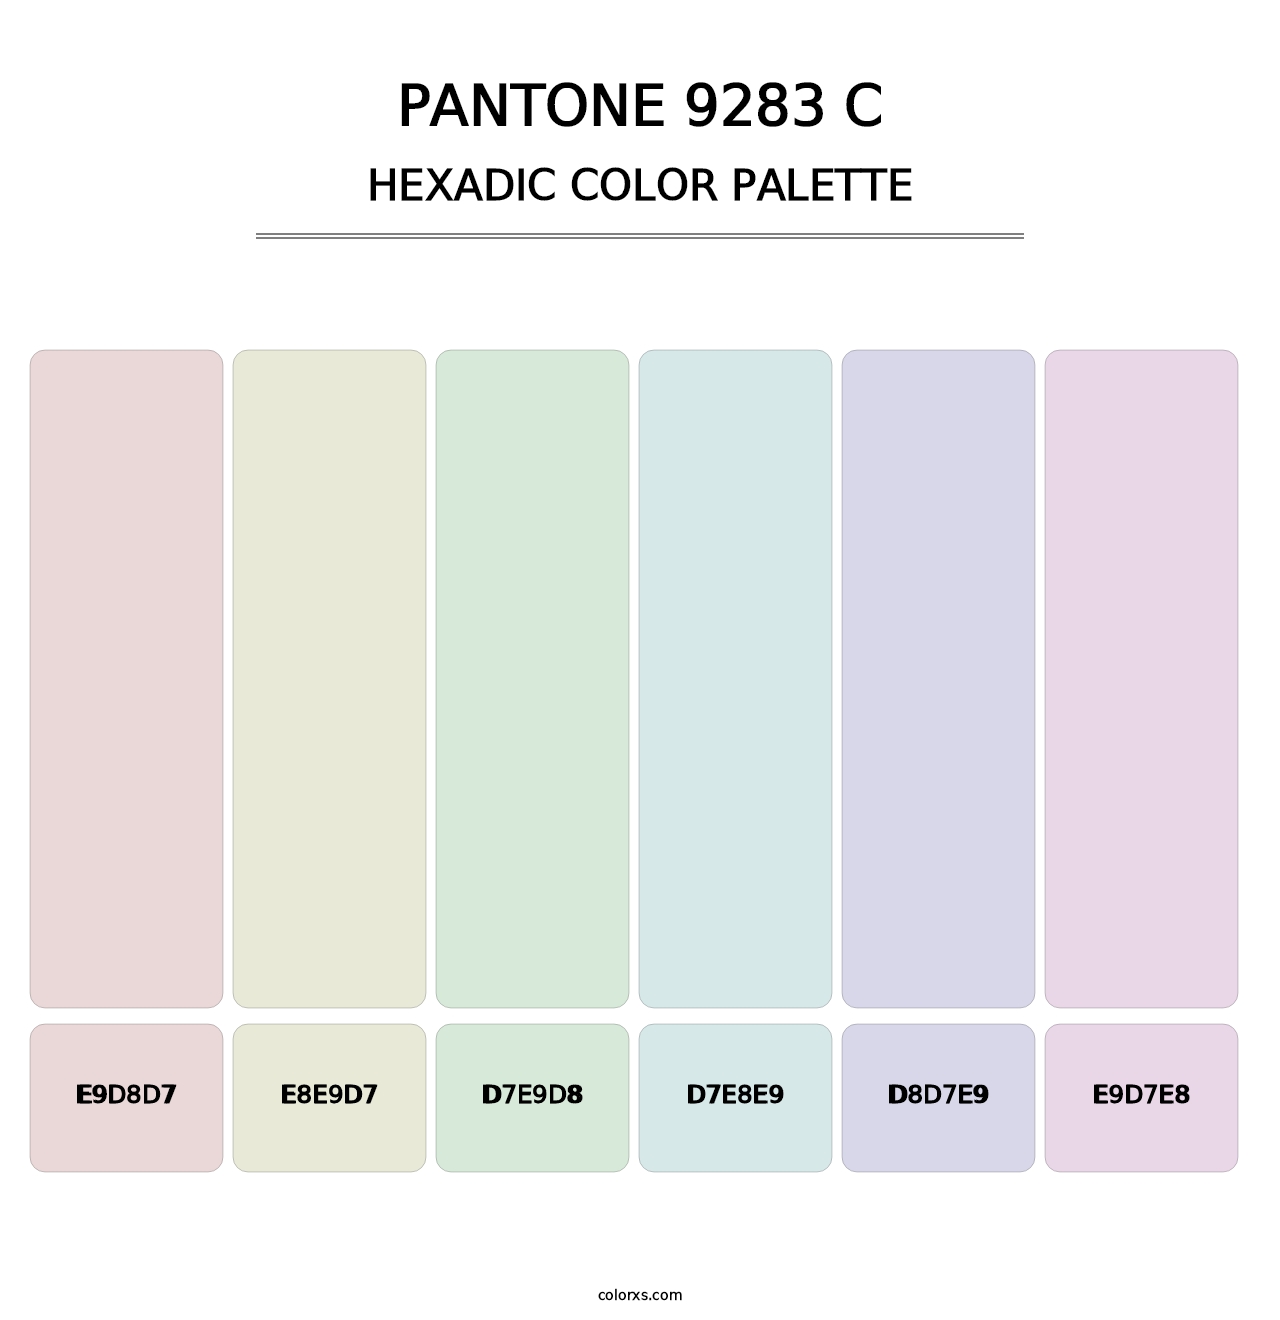 PANTONE 9283 C - Hexadic Color Palette